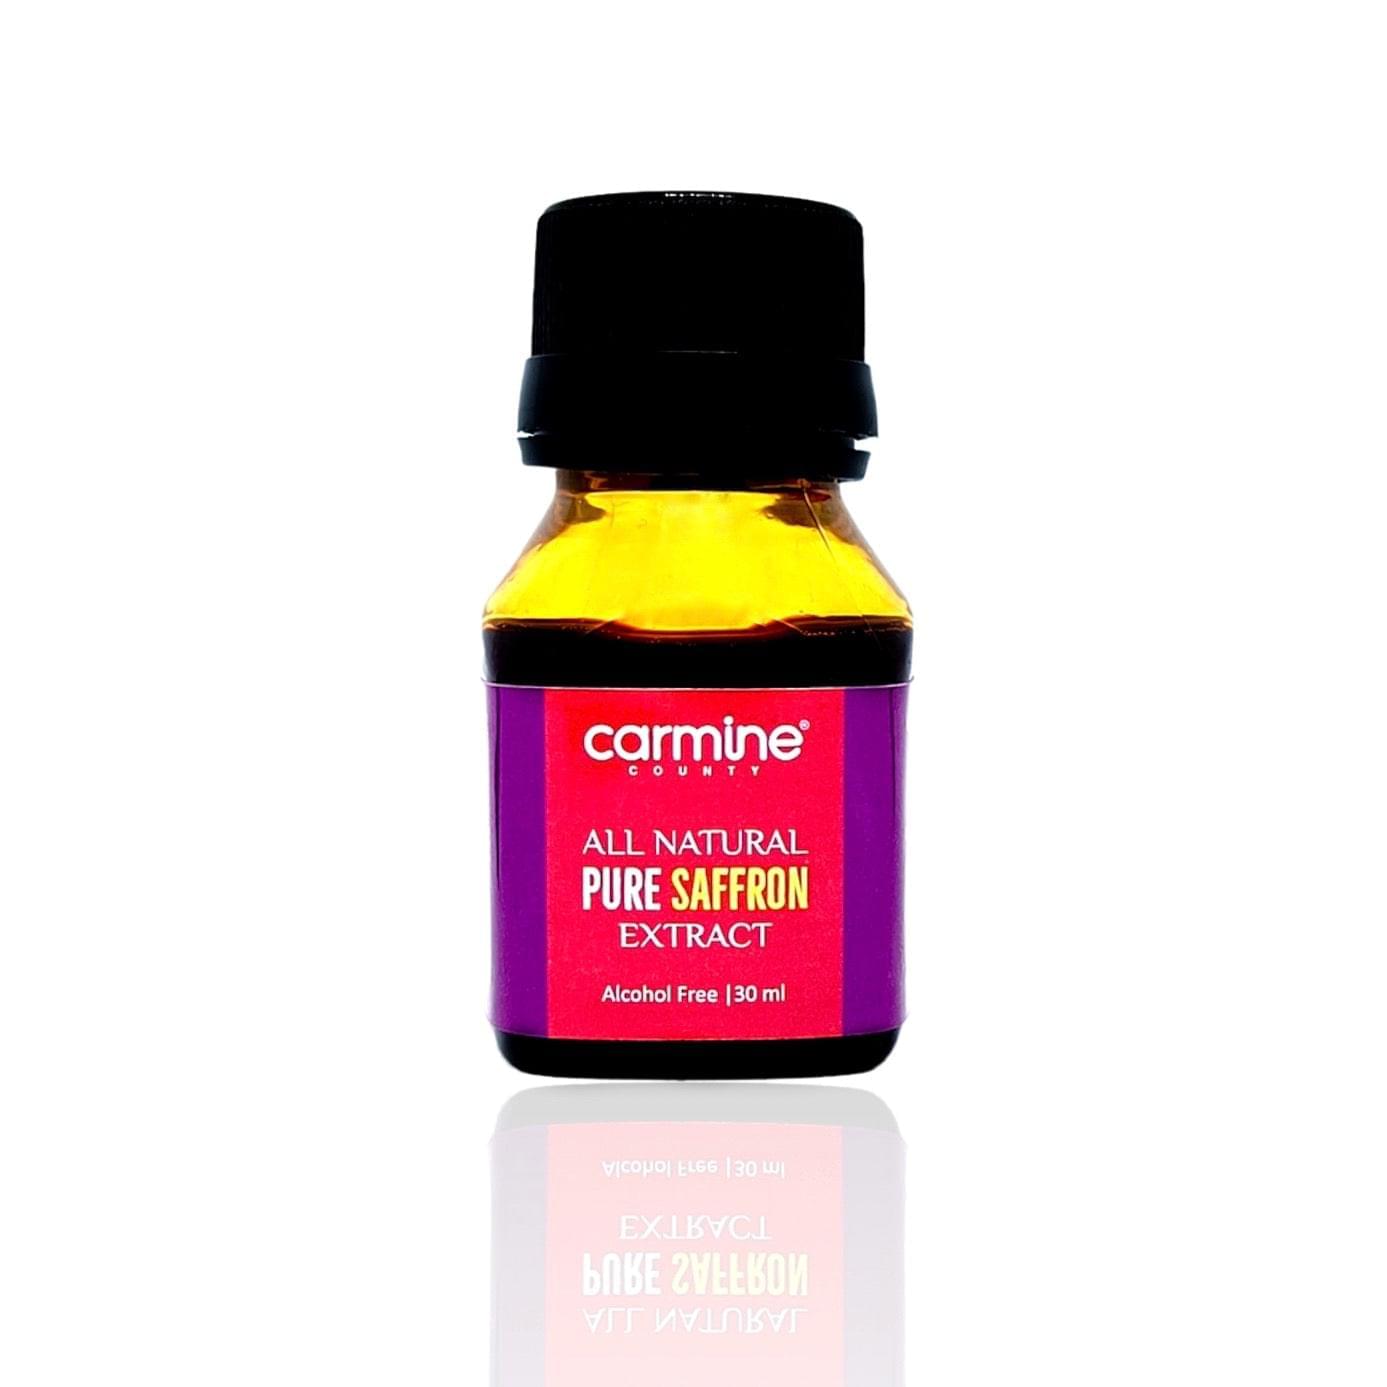 Carmine County All Natural Pure Saffron Extract